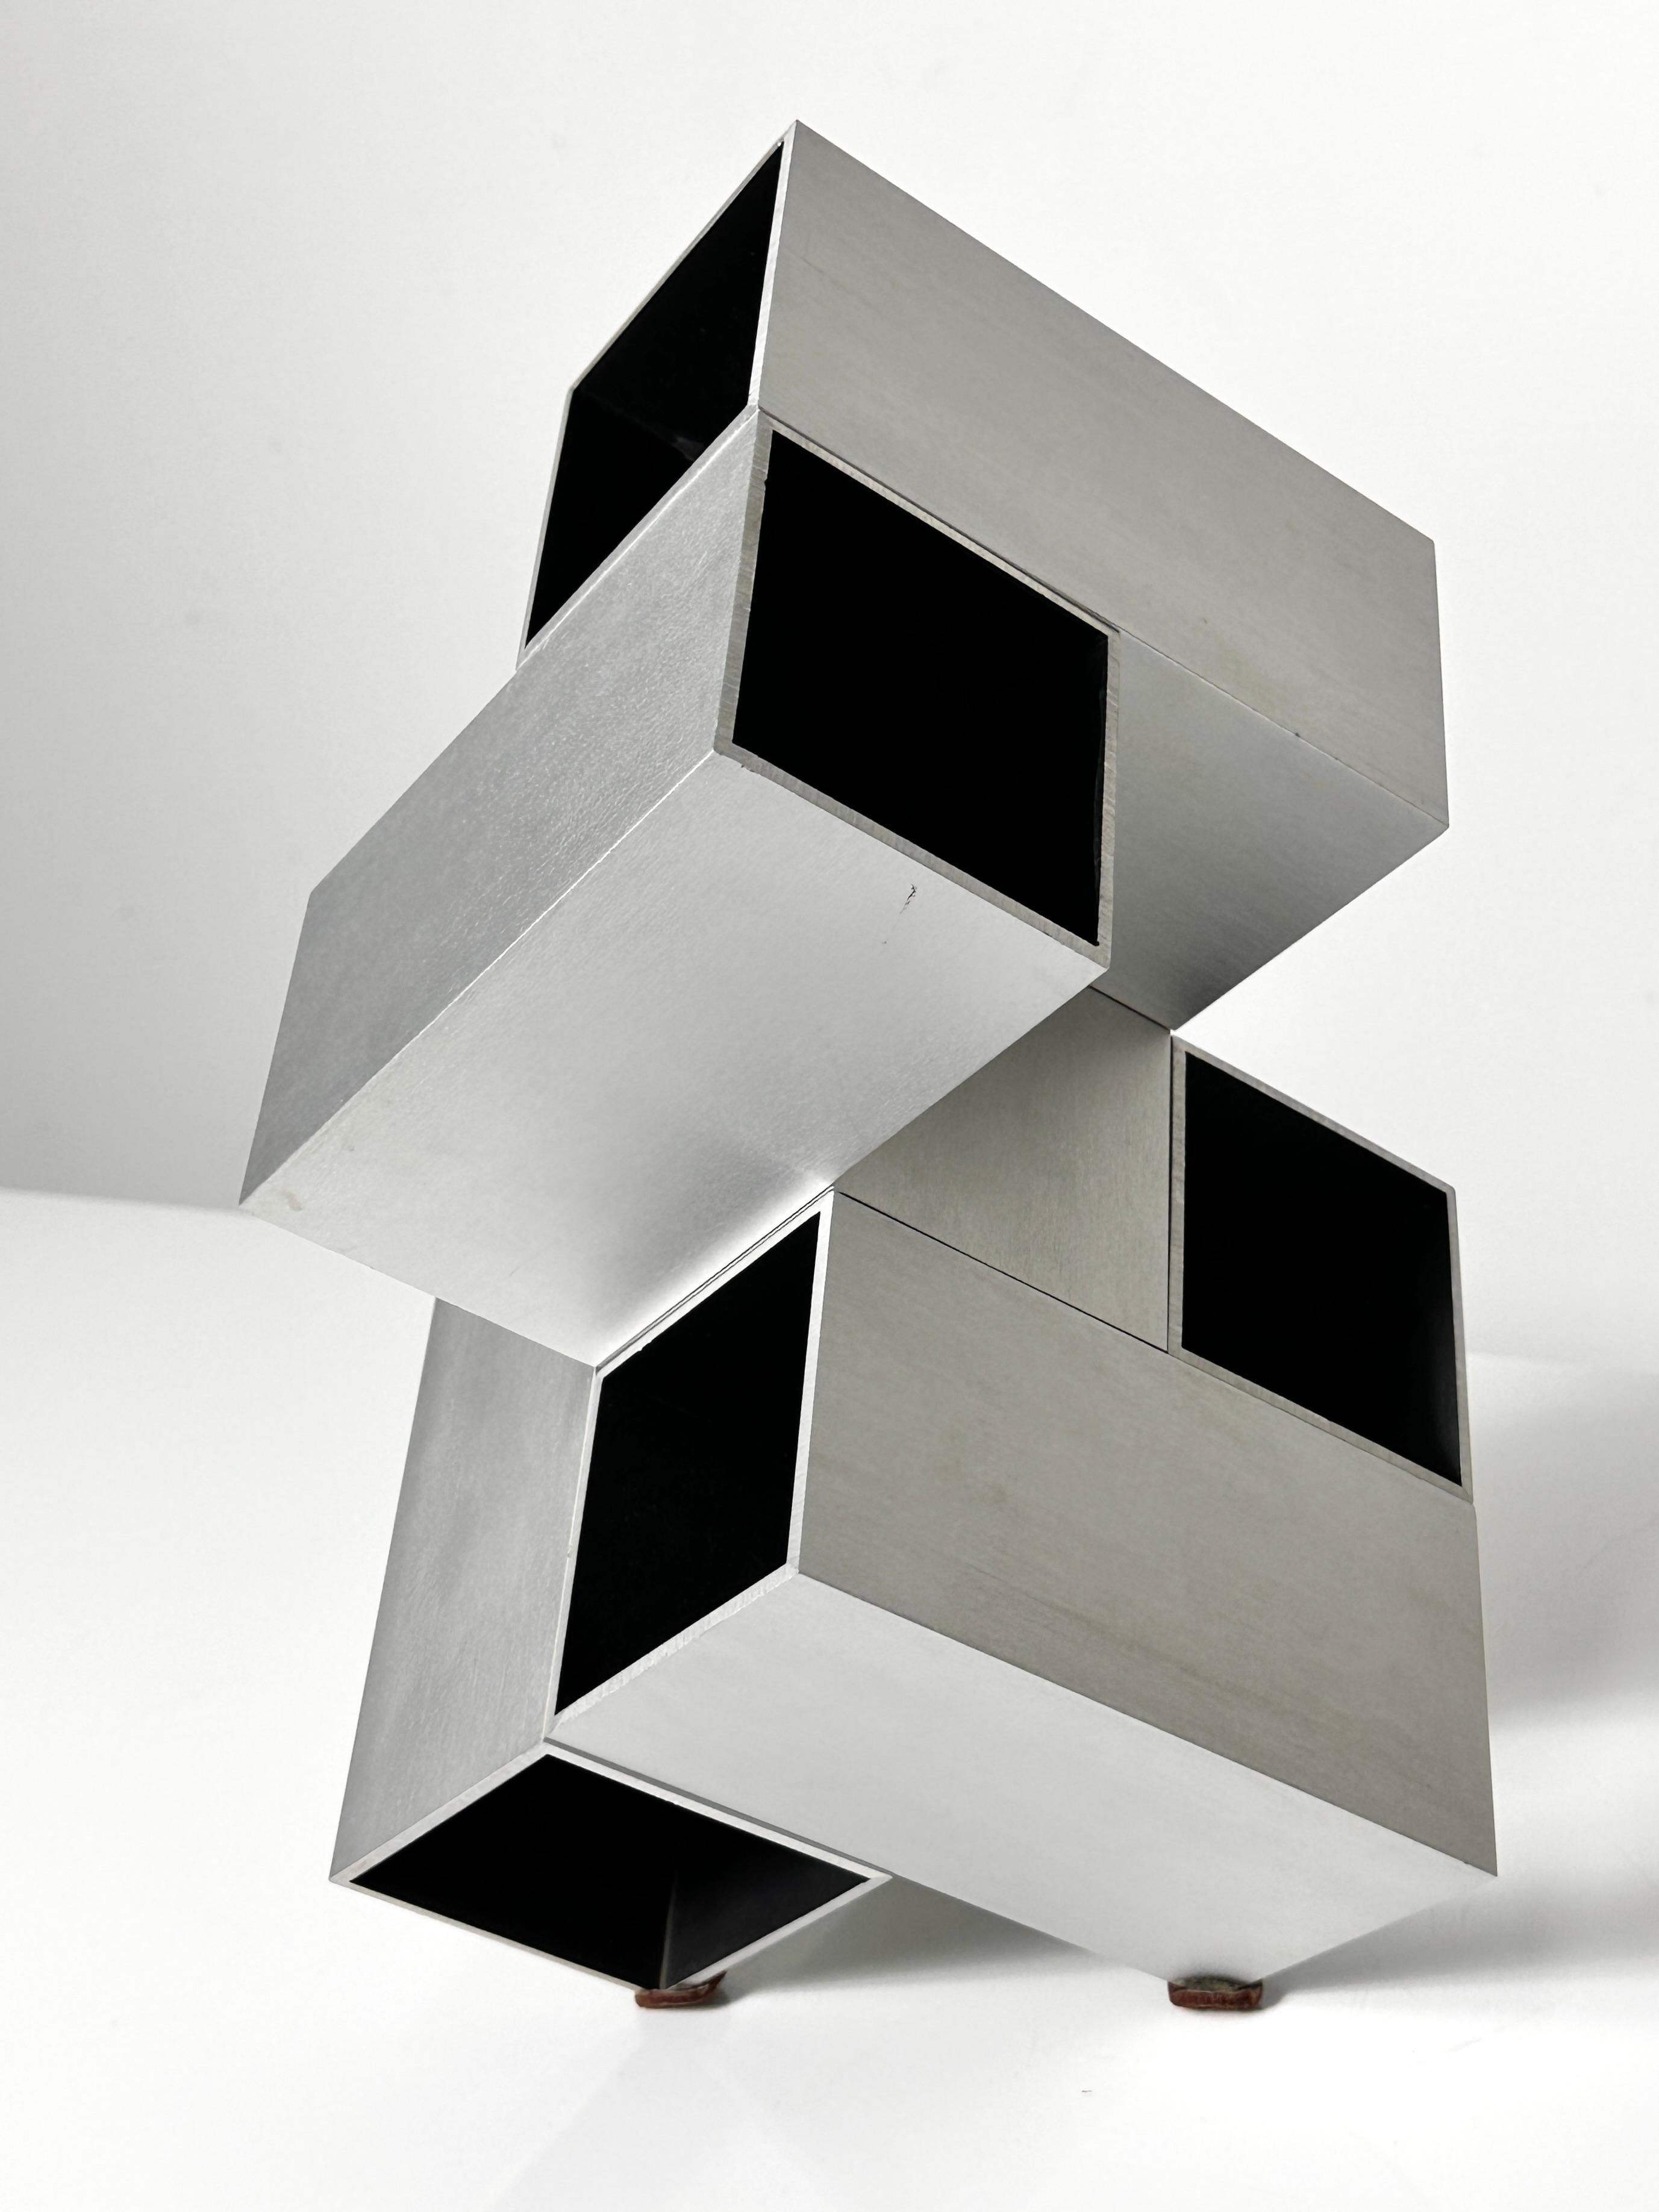 Abstract Modern Modular Aluminum Op Art Cube Sculpture by Kosso Eloul 1970s For Sale 2